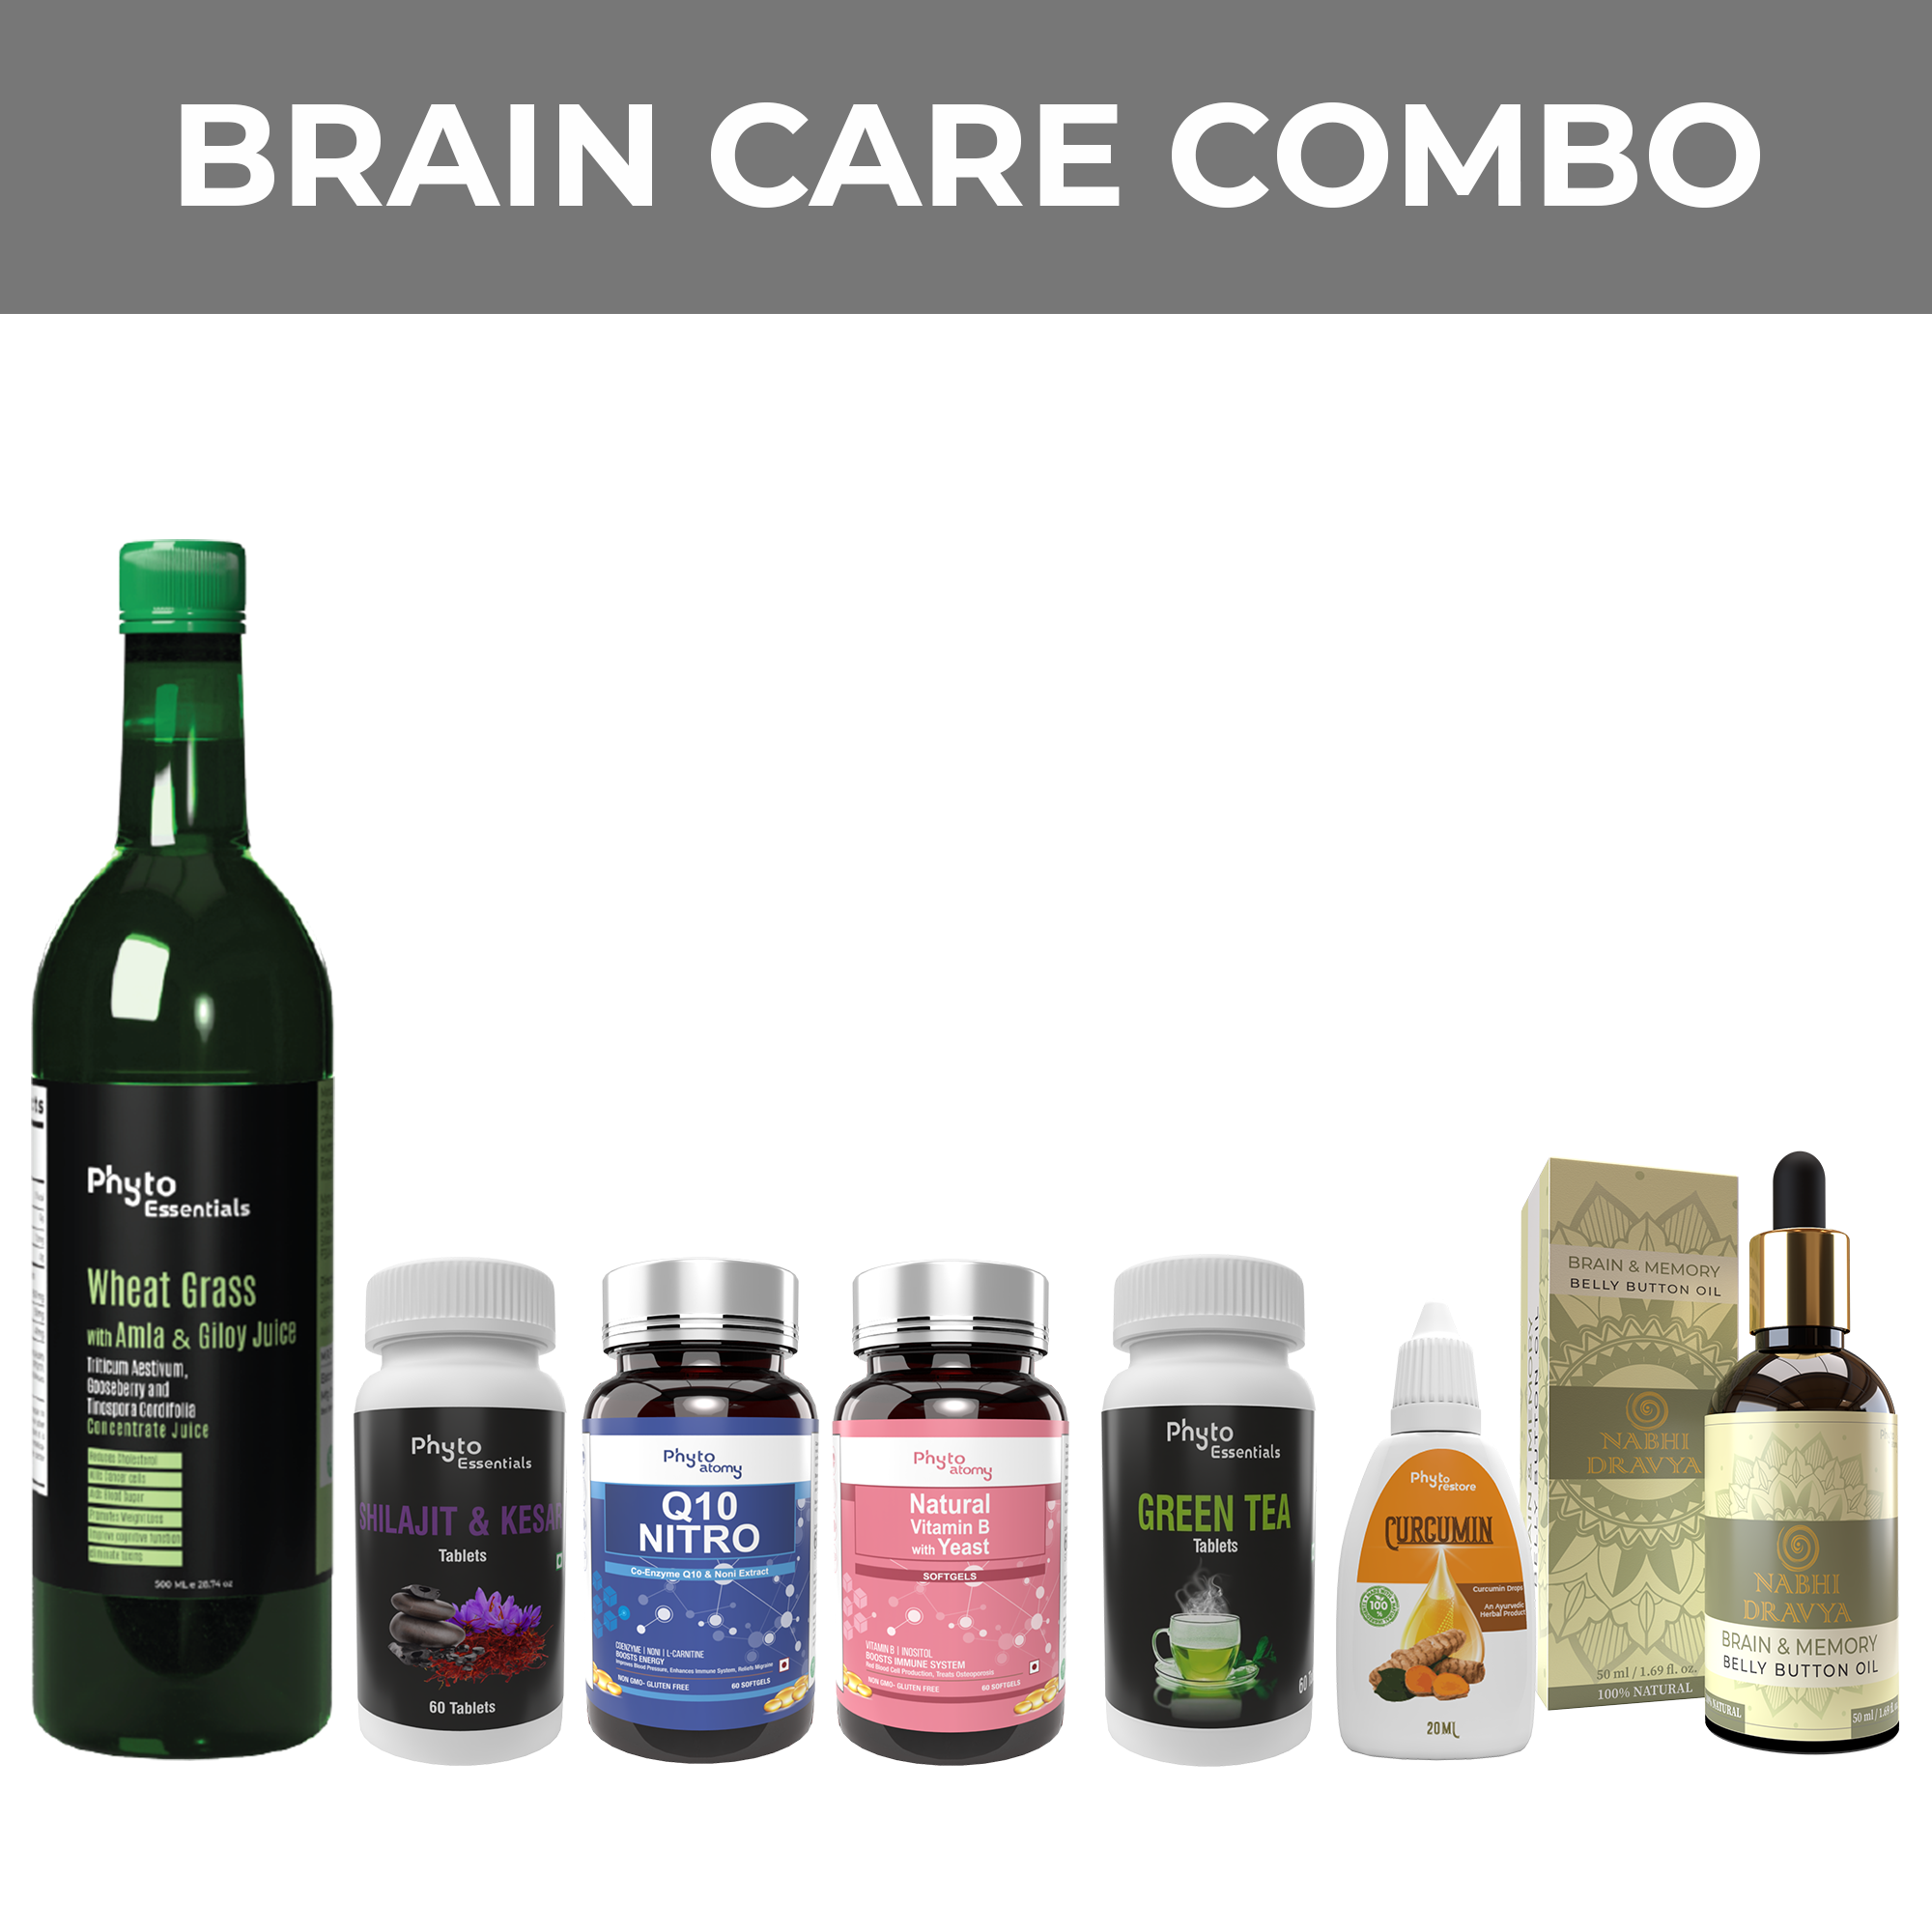 Brain care Combo